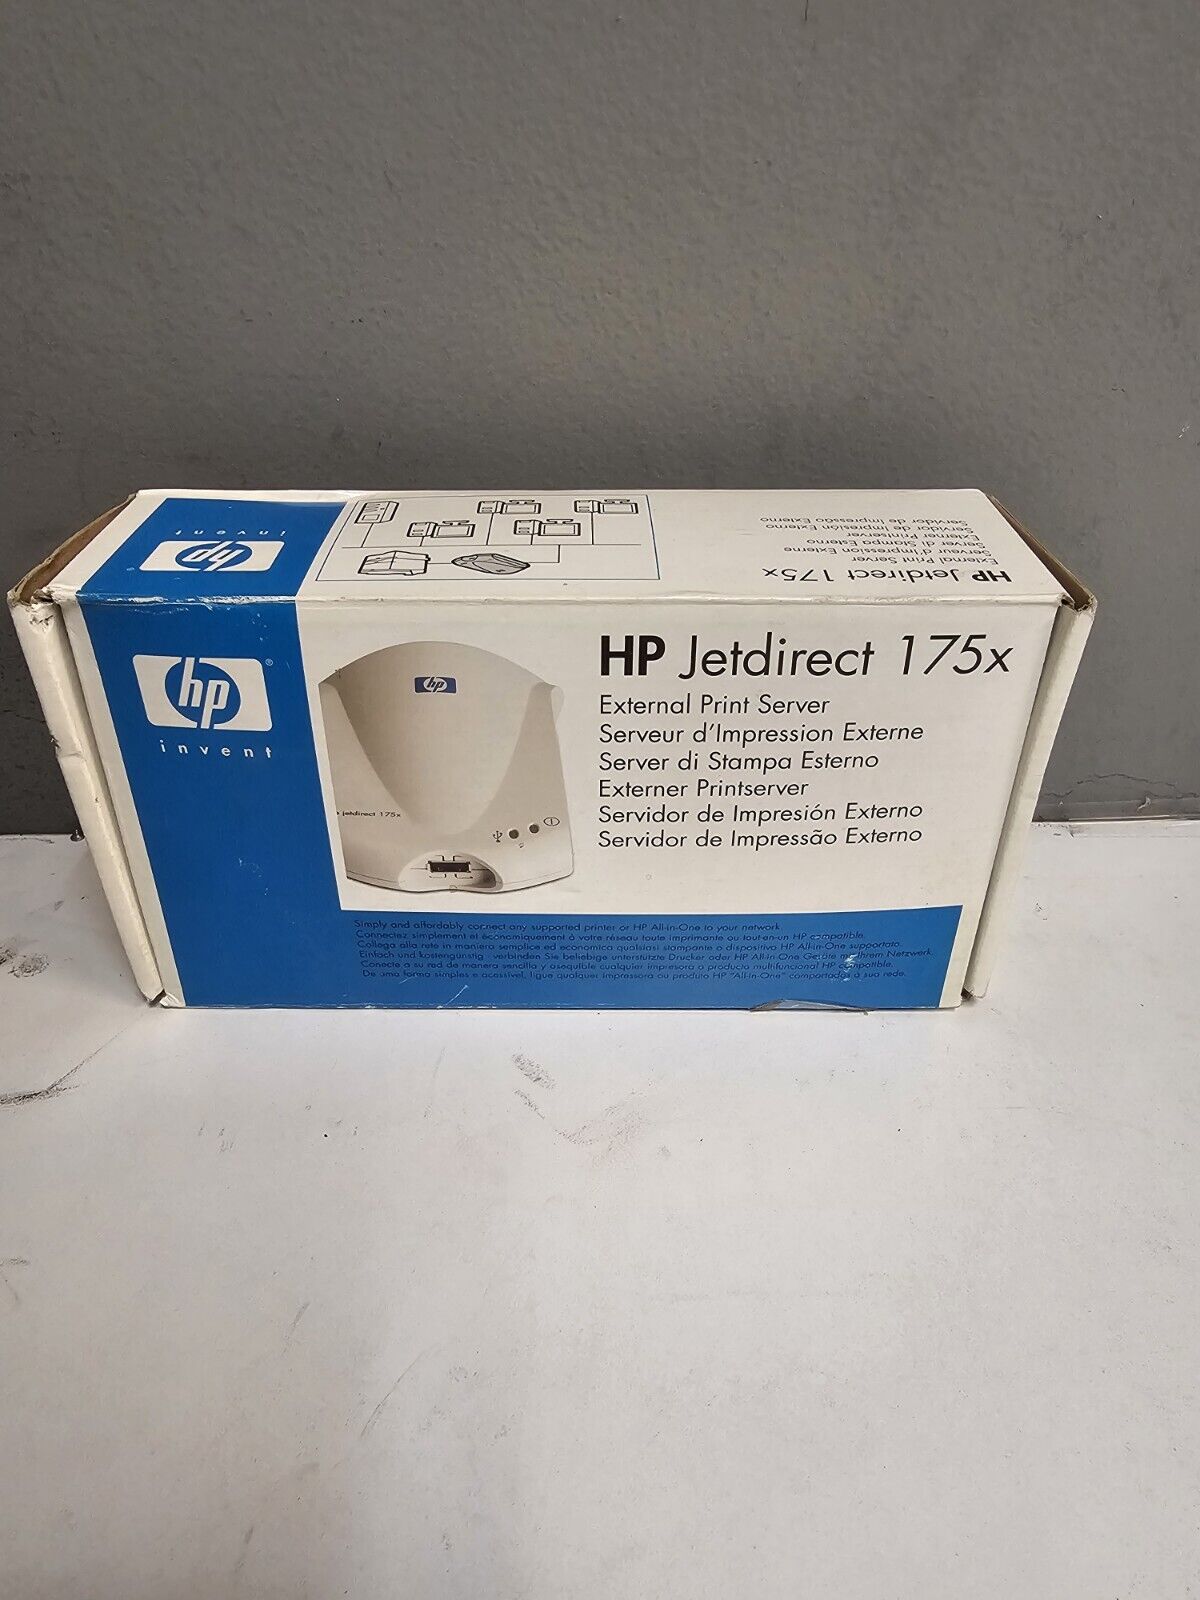 HP J6035G JET DIRECT 175X EXTERNAL PRINT SERVER